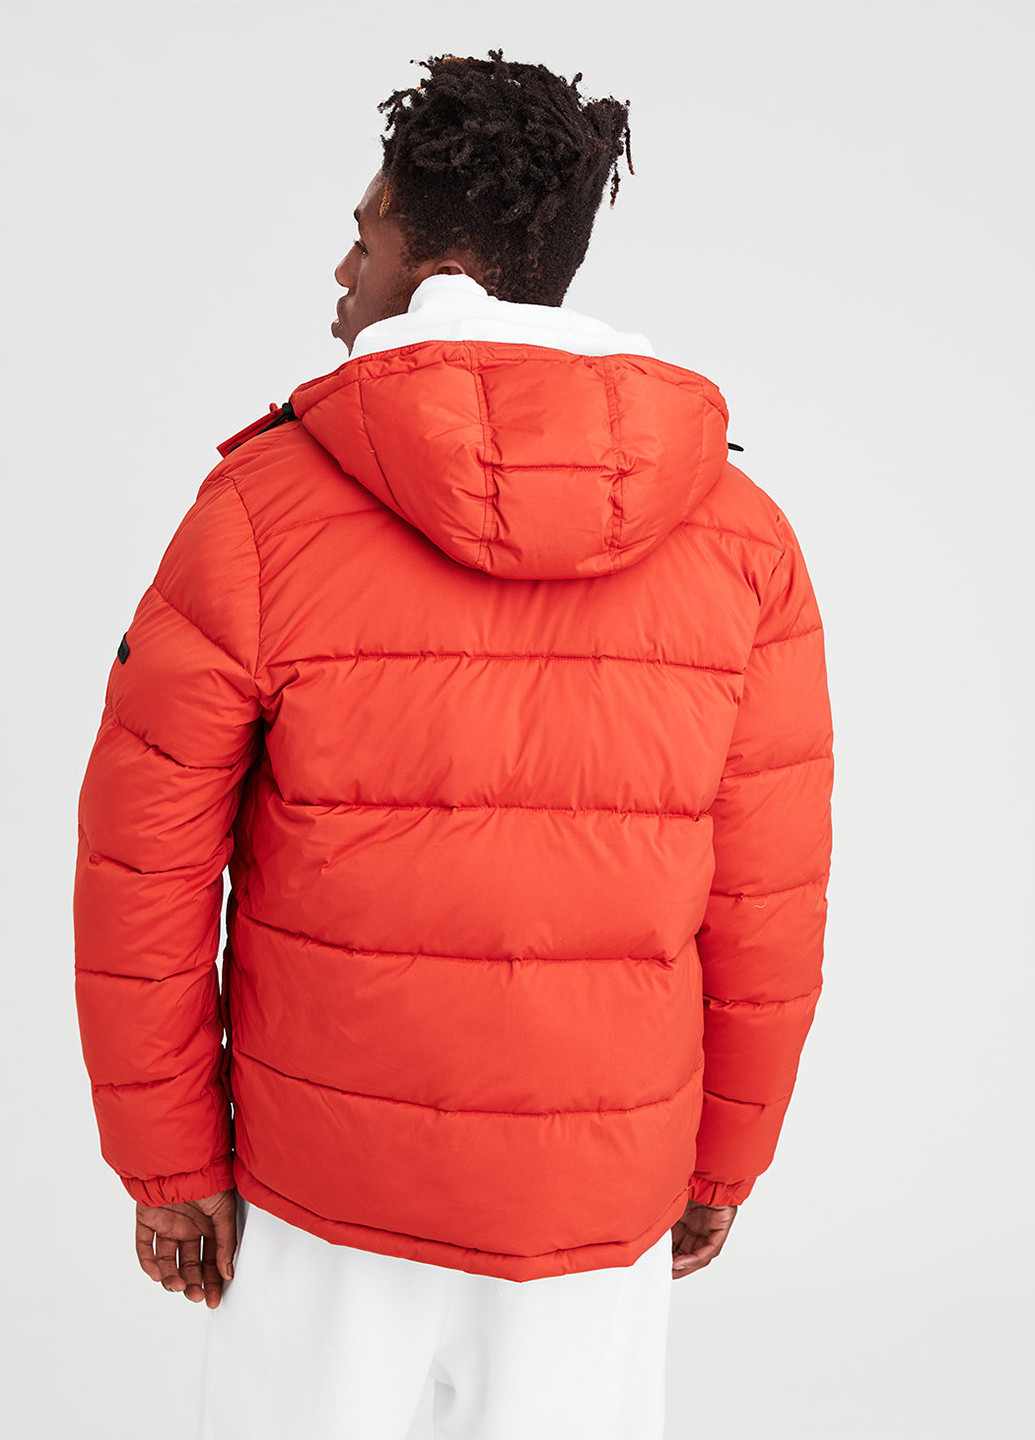 Оранжевая зимняя куртка American Eagle